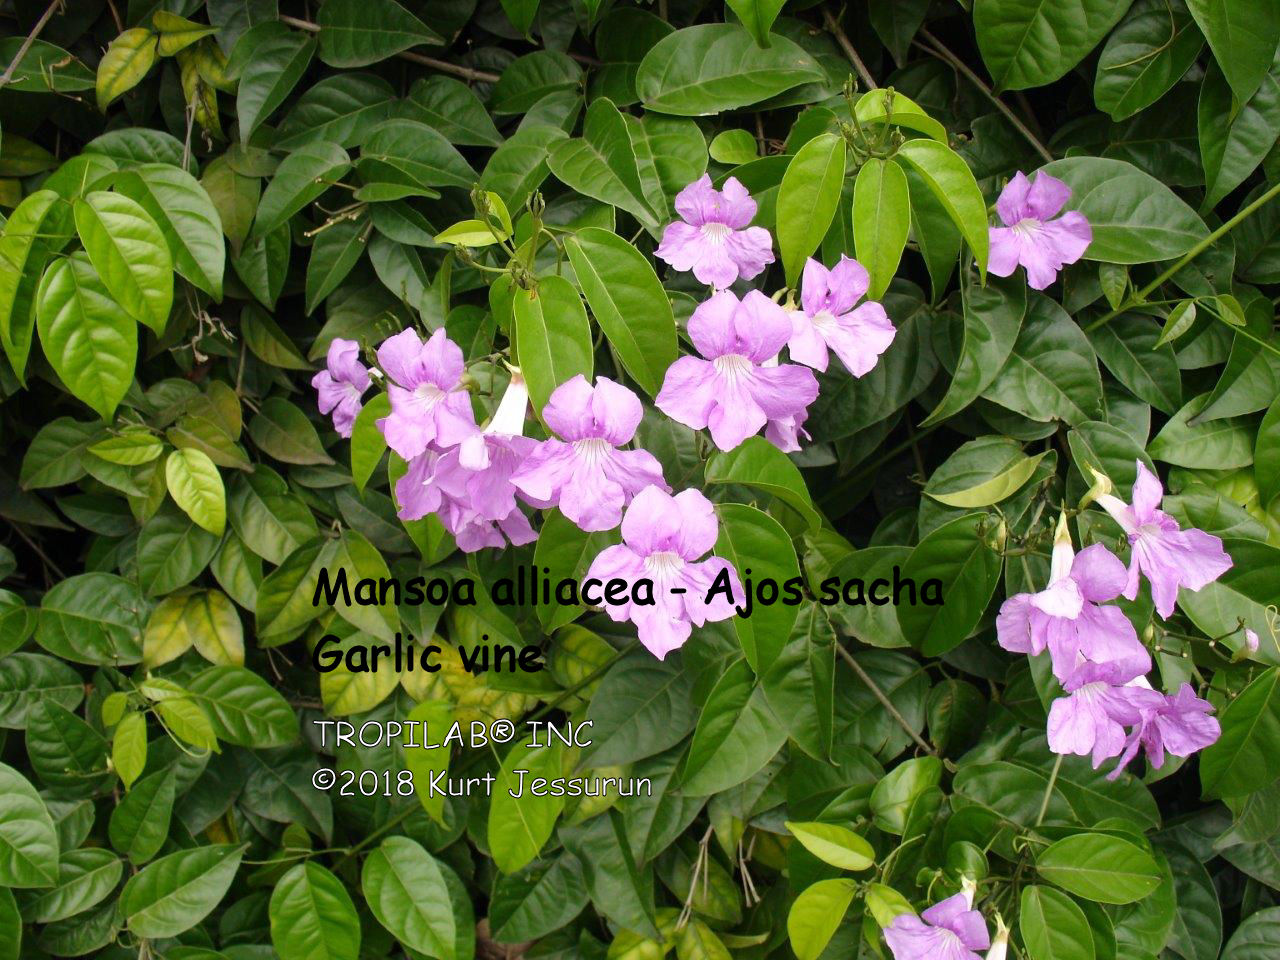 Mansoa alliacea - Ajos sacha or Garlic vine